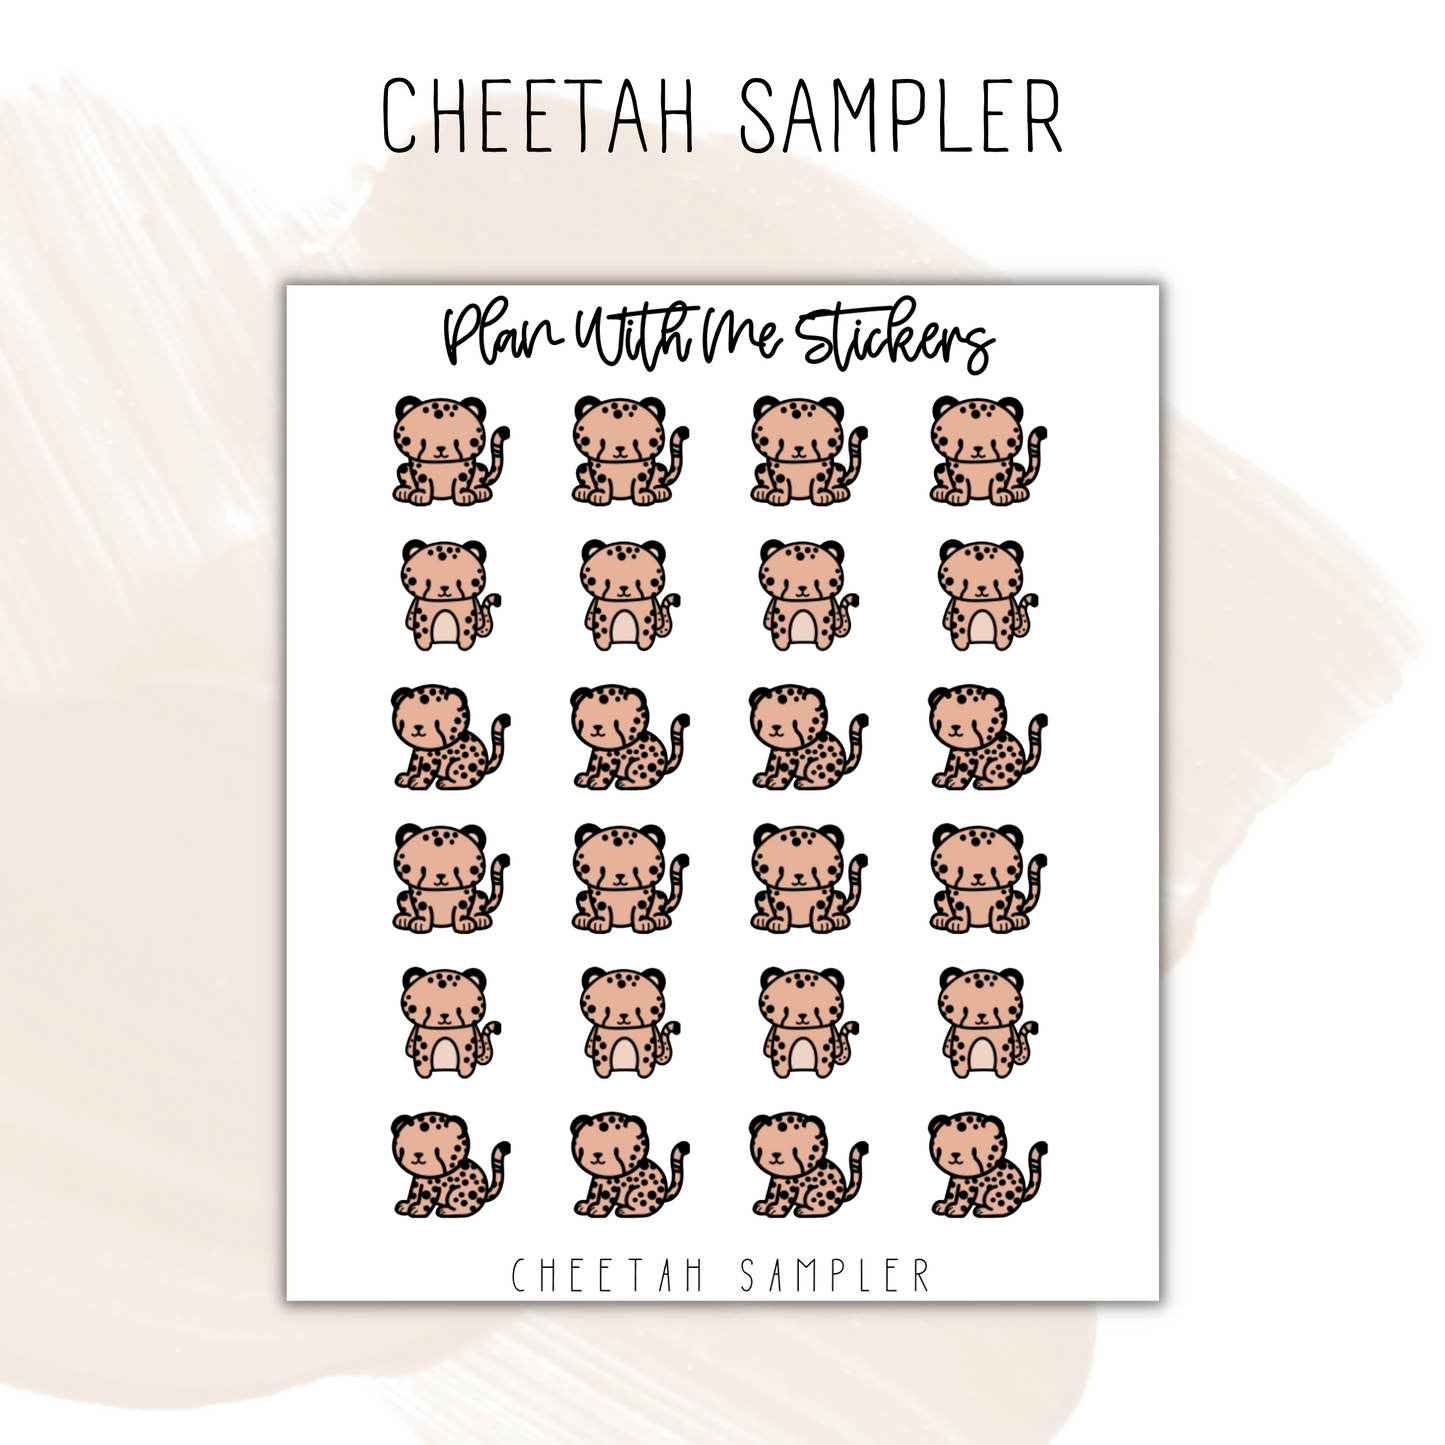 Cheetah Sampler | Doodles